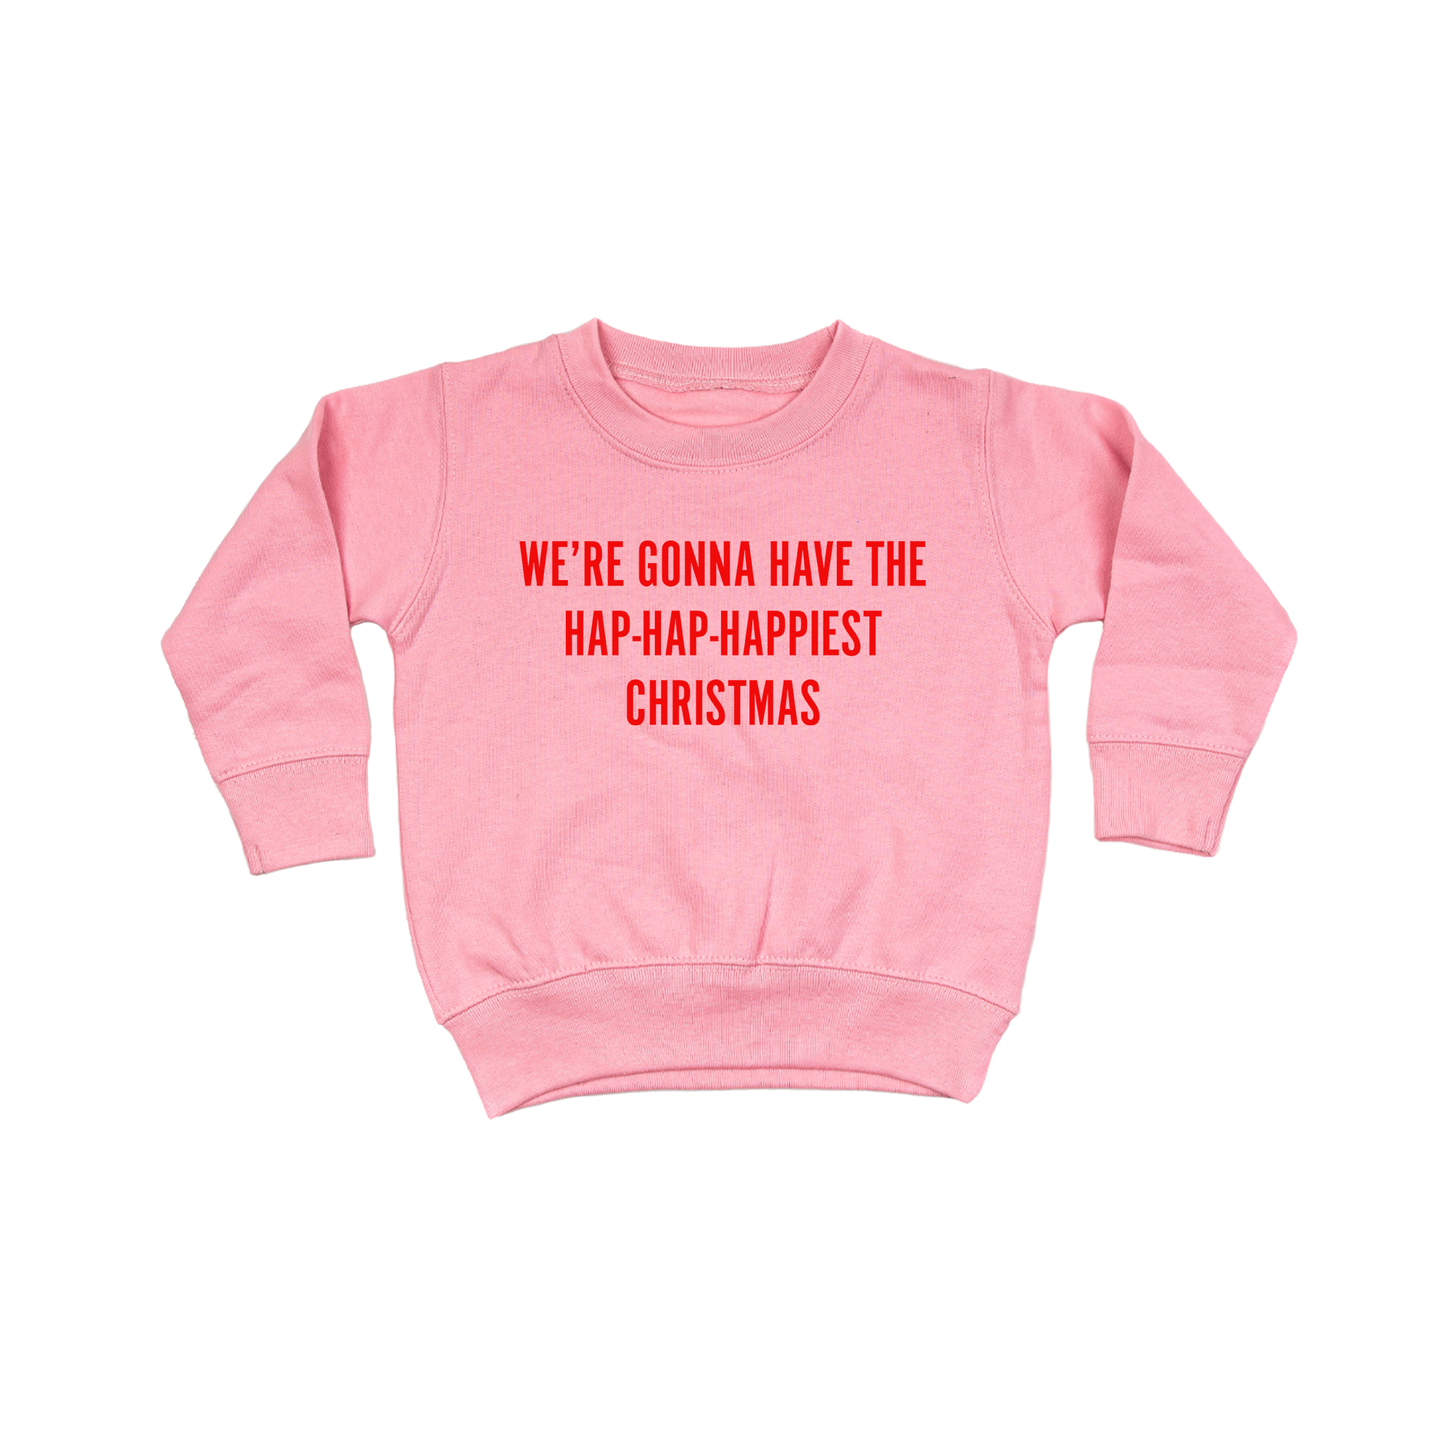 Hap-Hap-Happiest Christmas (Red) - Kids Sweatshirt (Pink)